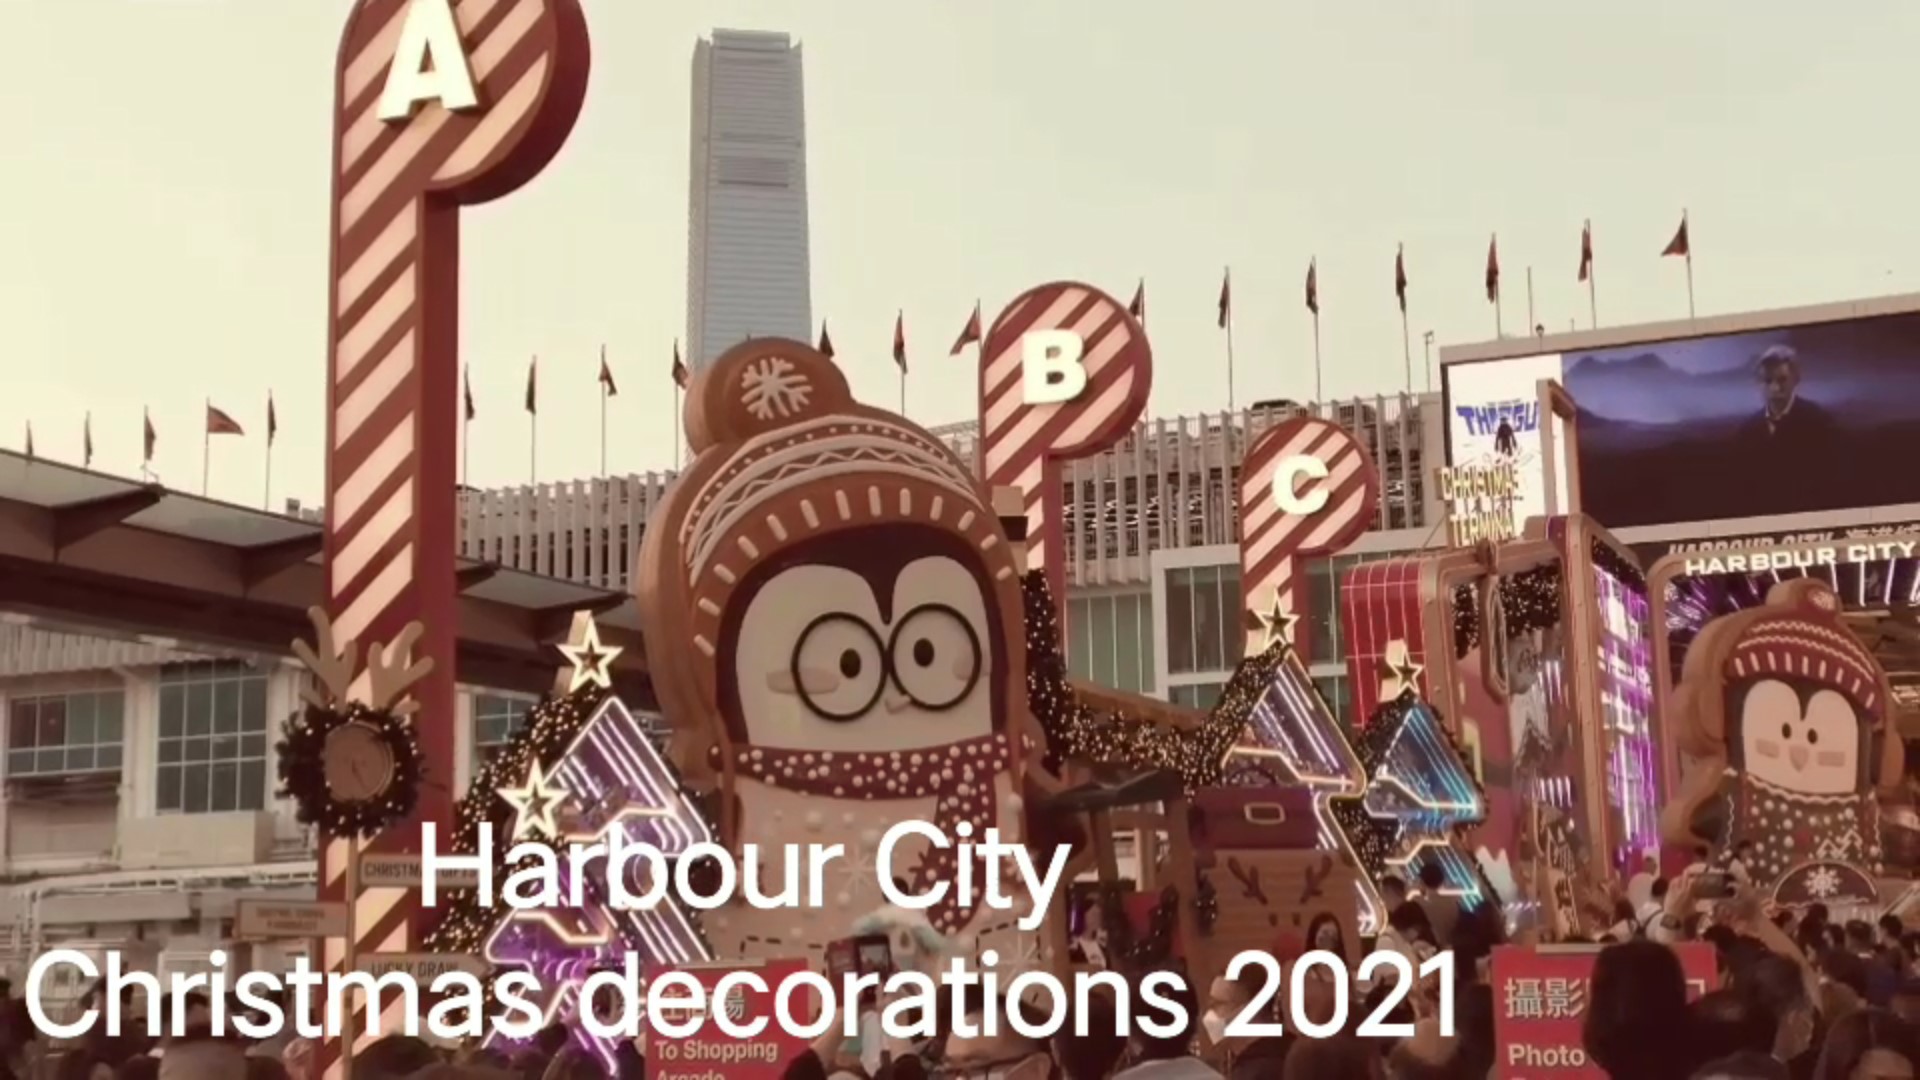 Frank’s “Harbour City Christmas decorations 2021” snapshots video